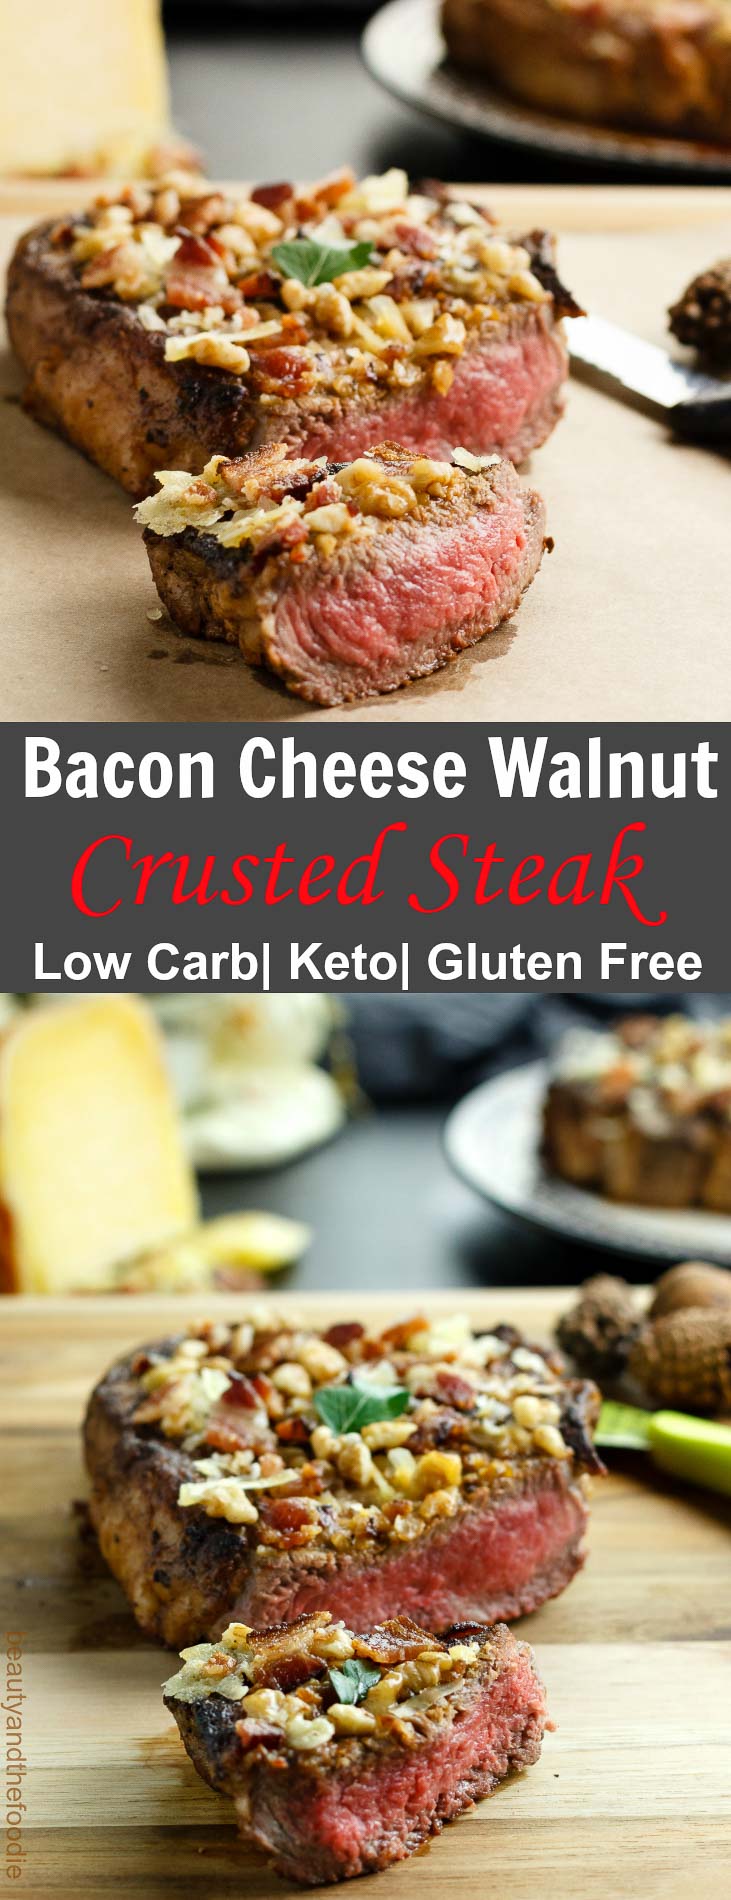 Bacon Cheese Walnut Crusted Steak- Low Carb, Keto and Grain free. #sponsored #steak #mahonmenorca